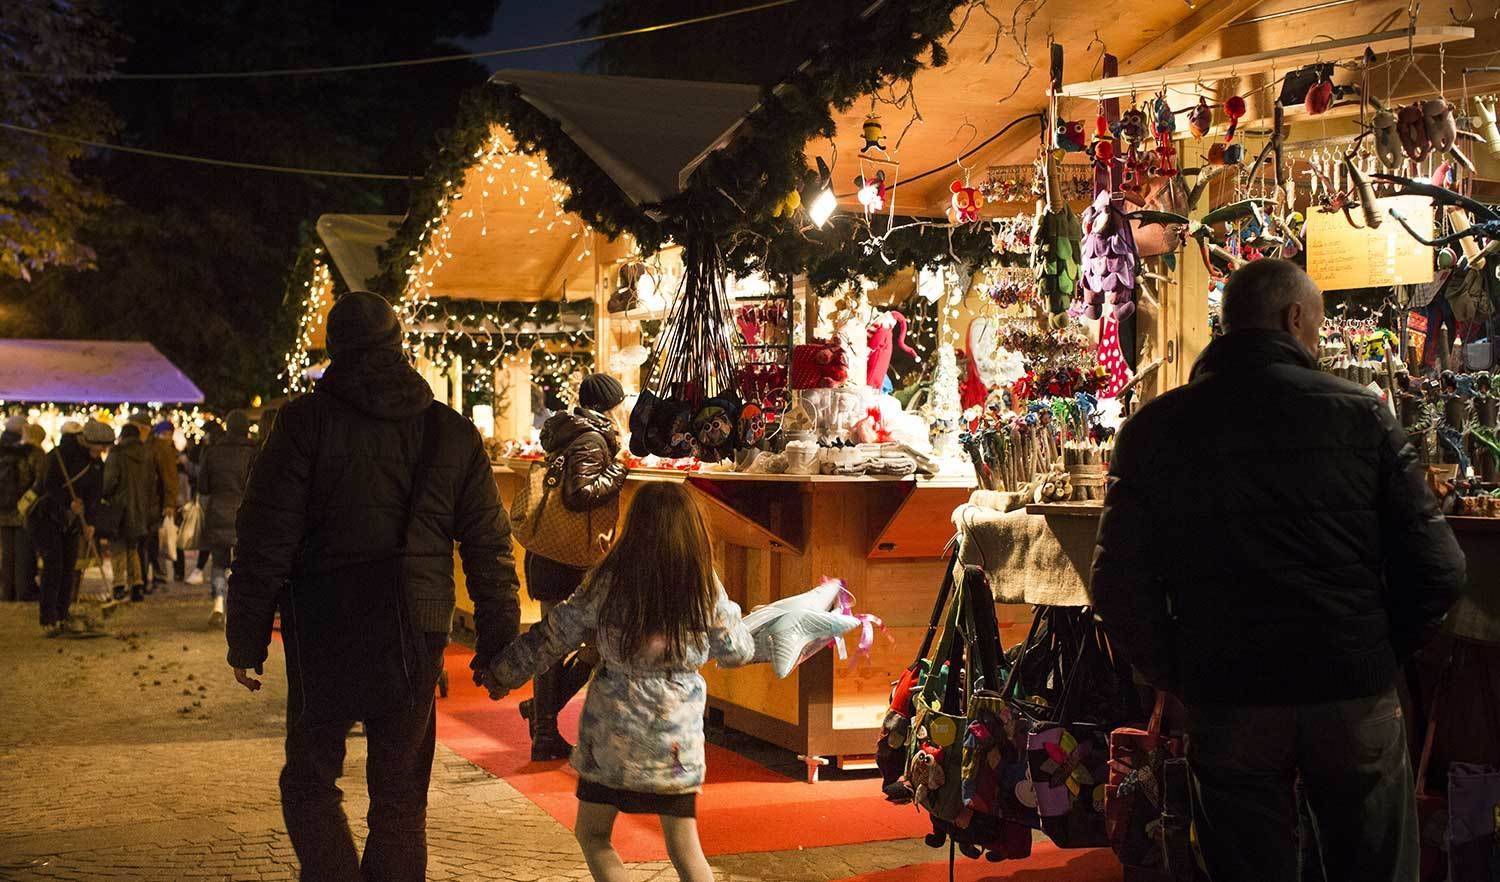 The Arco Christmas market